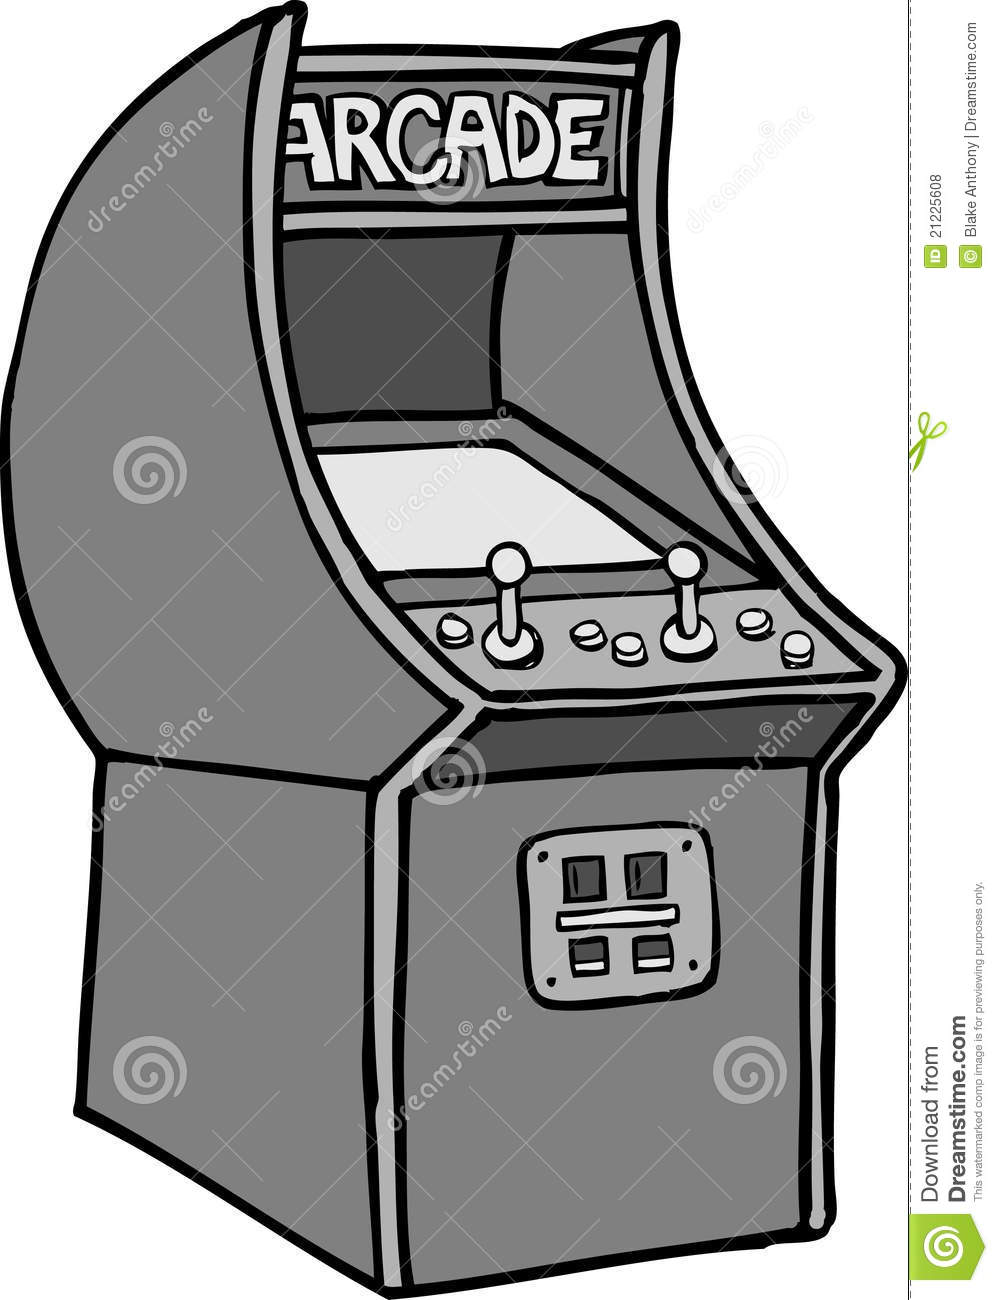 Arcade Clipart Arcade Machine